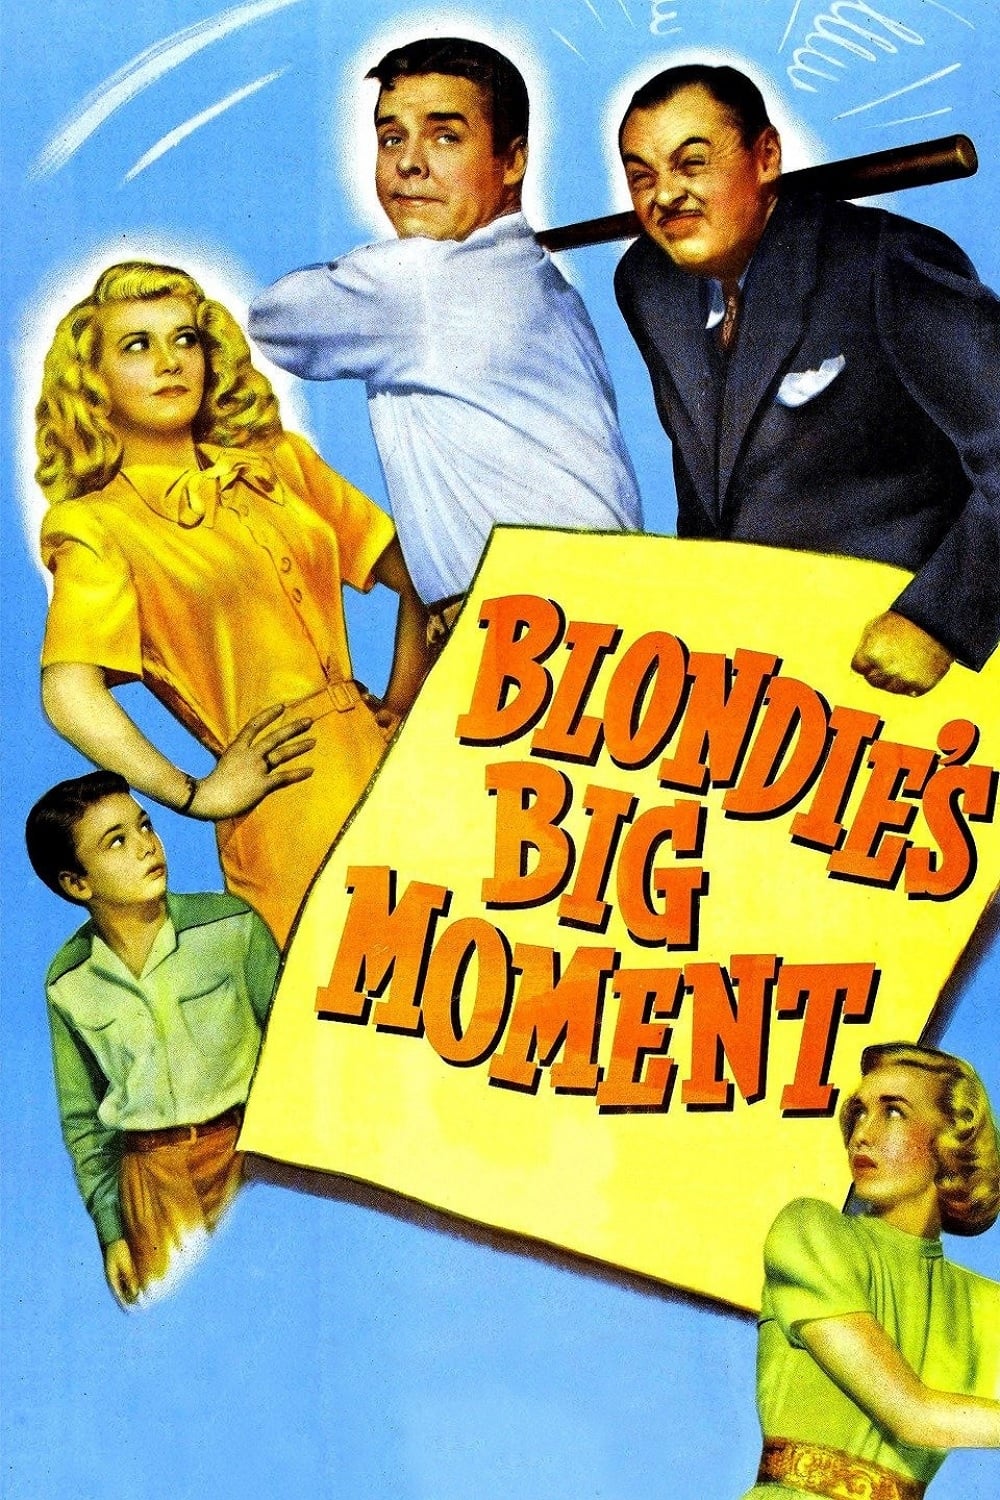 Blondie's Big Moment (1947)